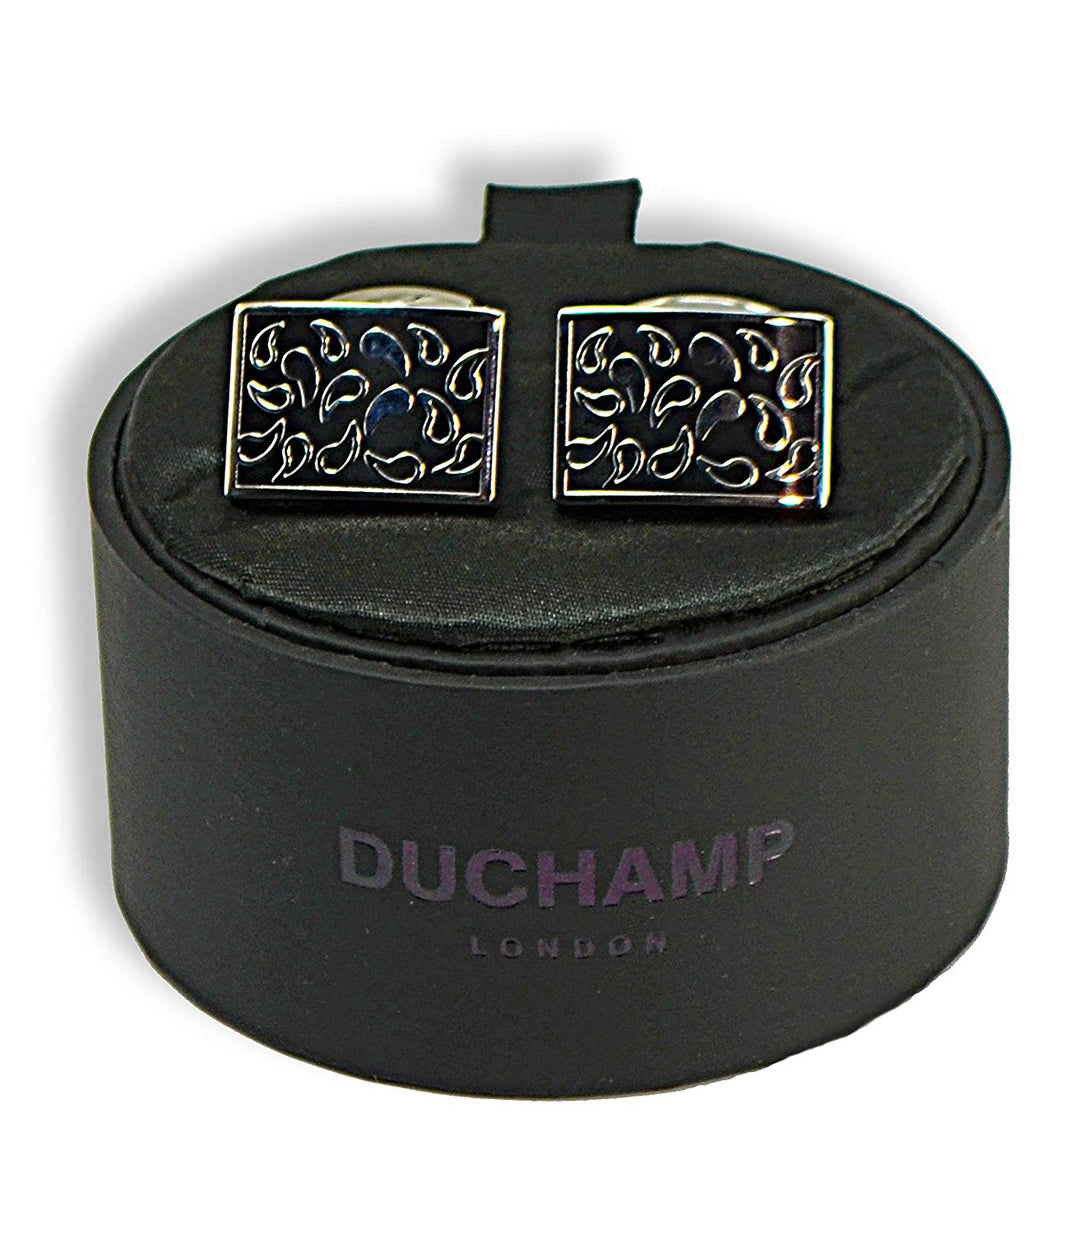 Duchamp London Paisley Cuff Links